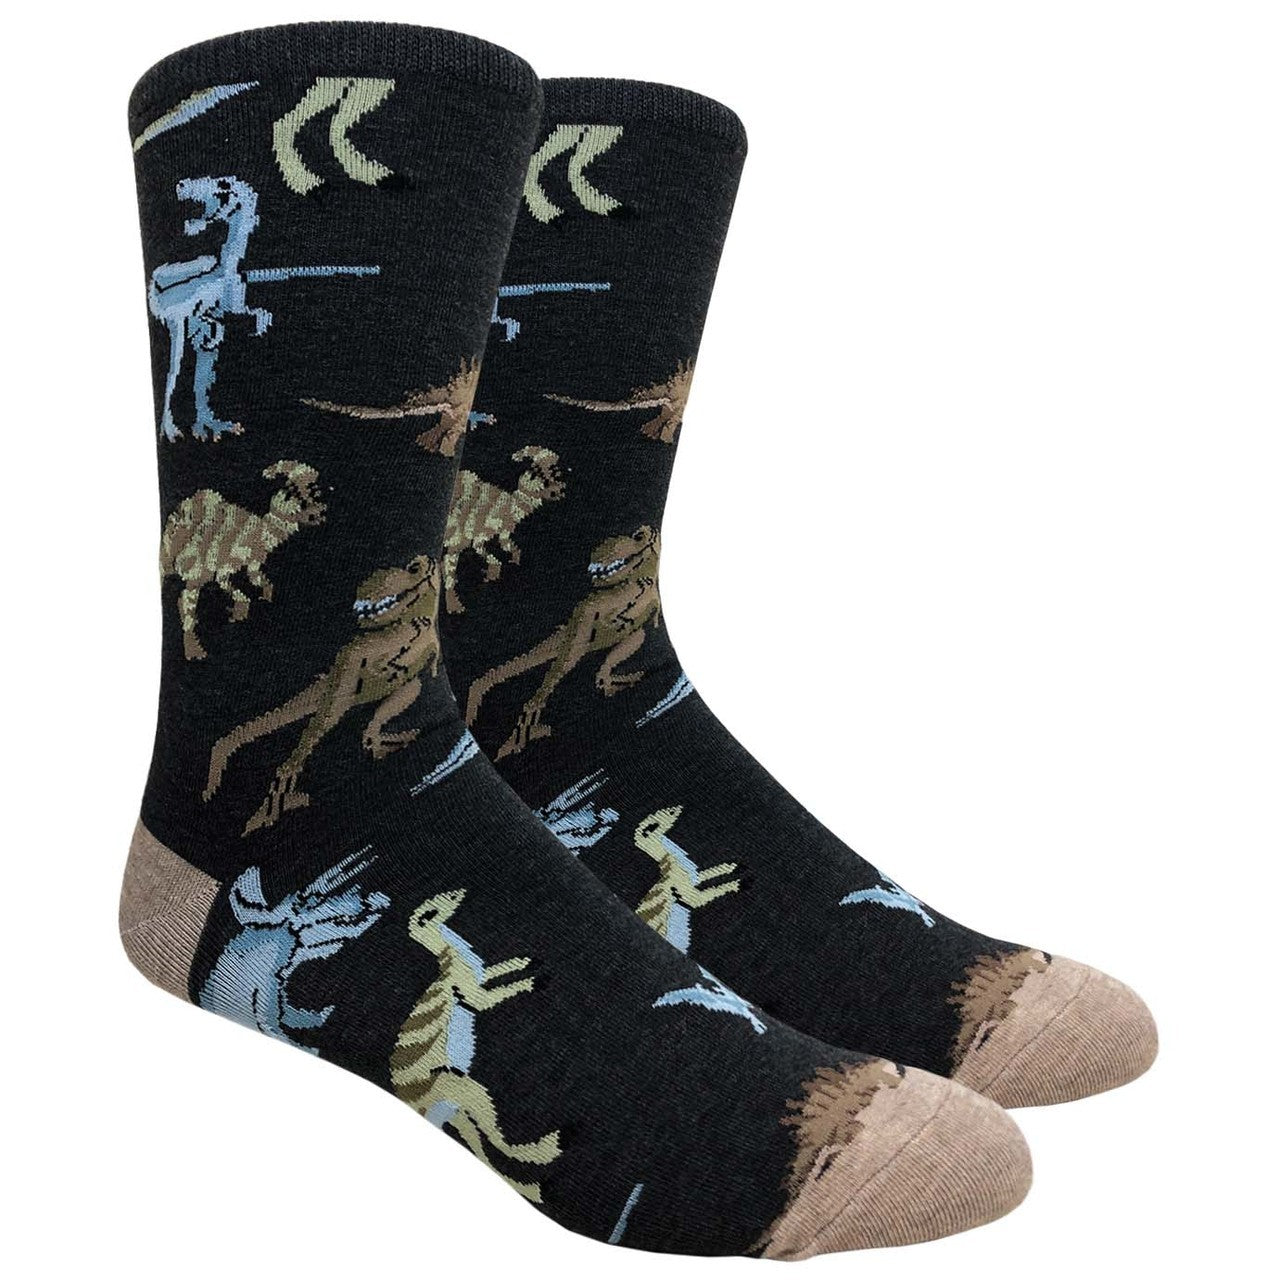 Men's Novelty Crew Socks - Dinosaurs - Dark Charcoal & Beige Toe